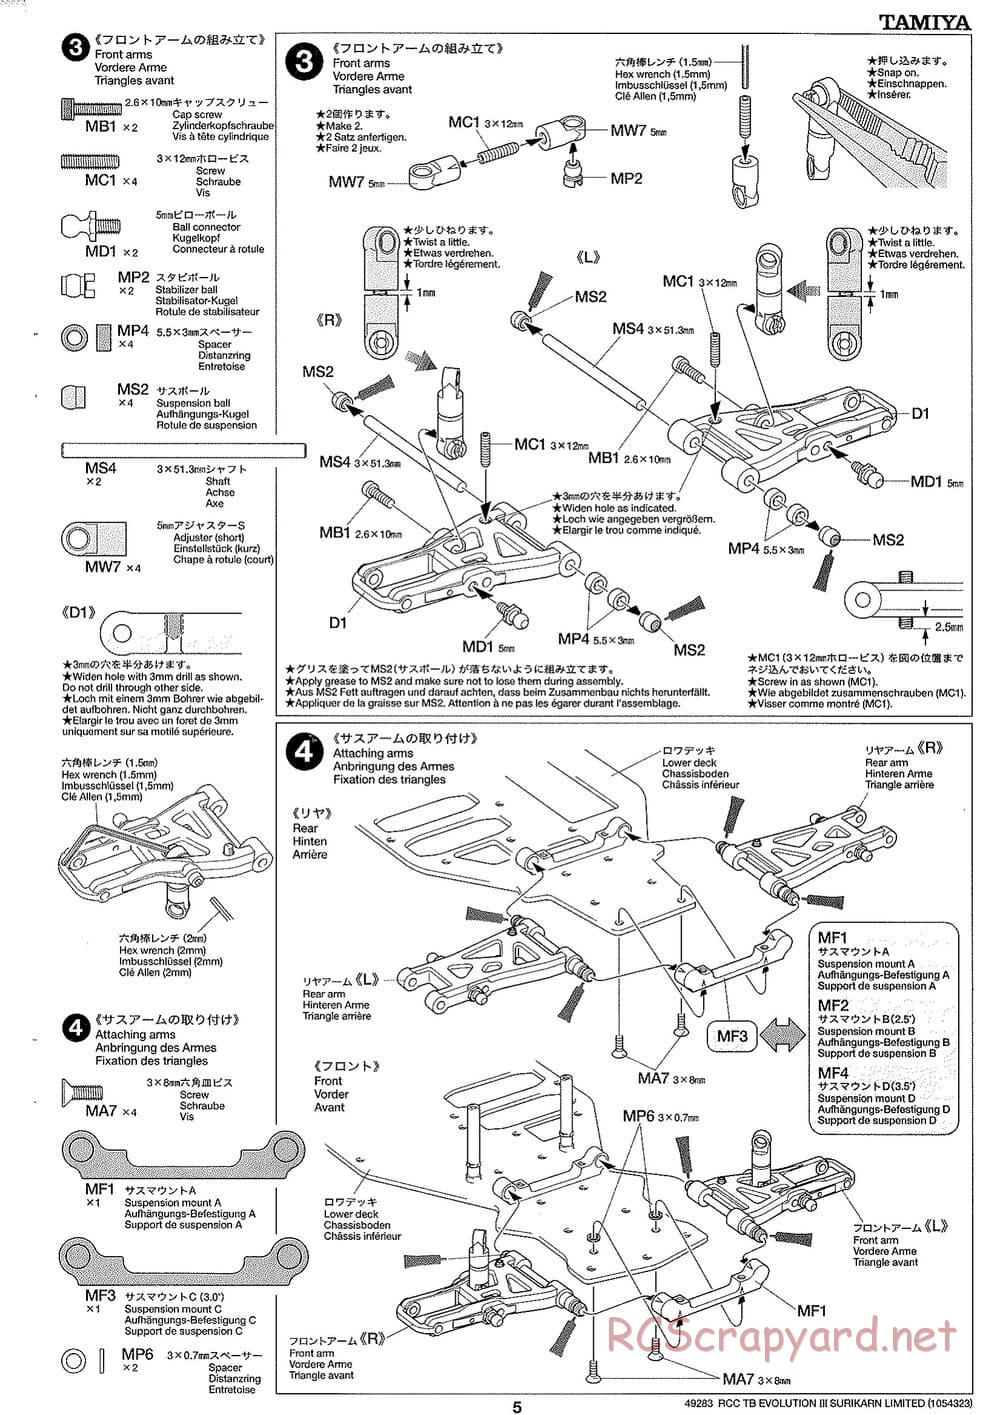 Tamiya - TB Evolution III Surikarn Limited Chassis - Manual - Page 5